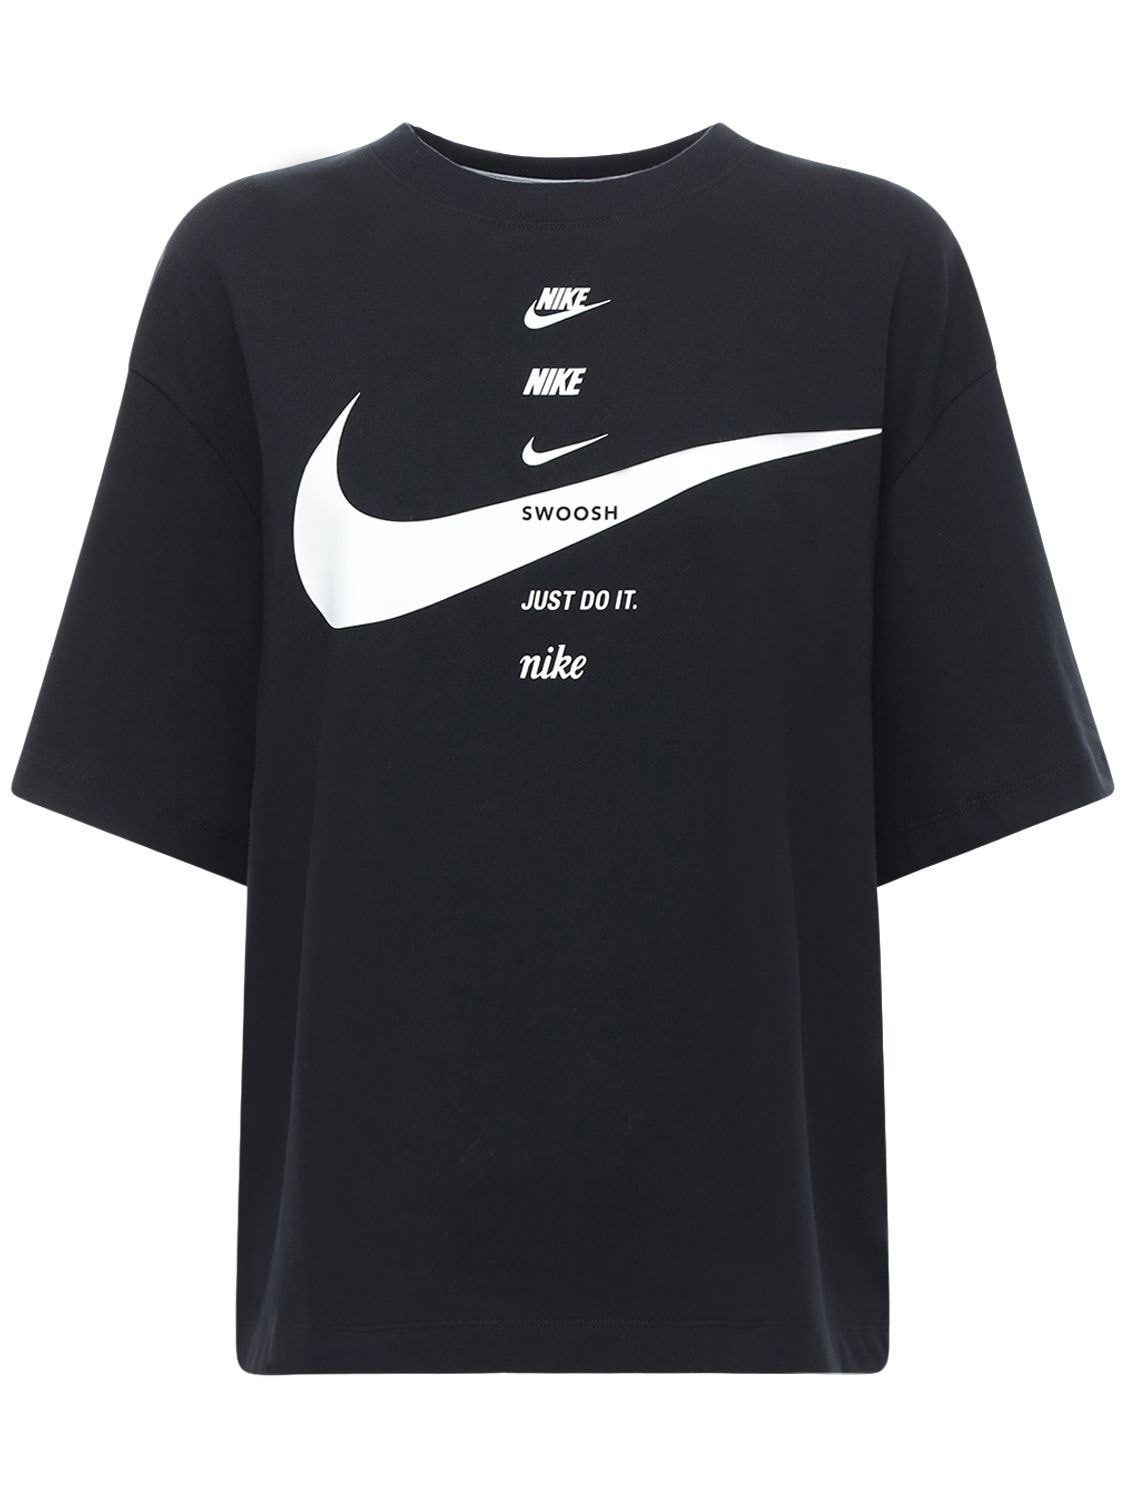 Nike Swoosh Print Cotton T-shirt In Black